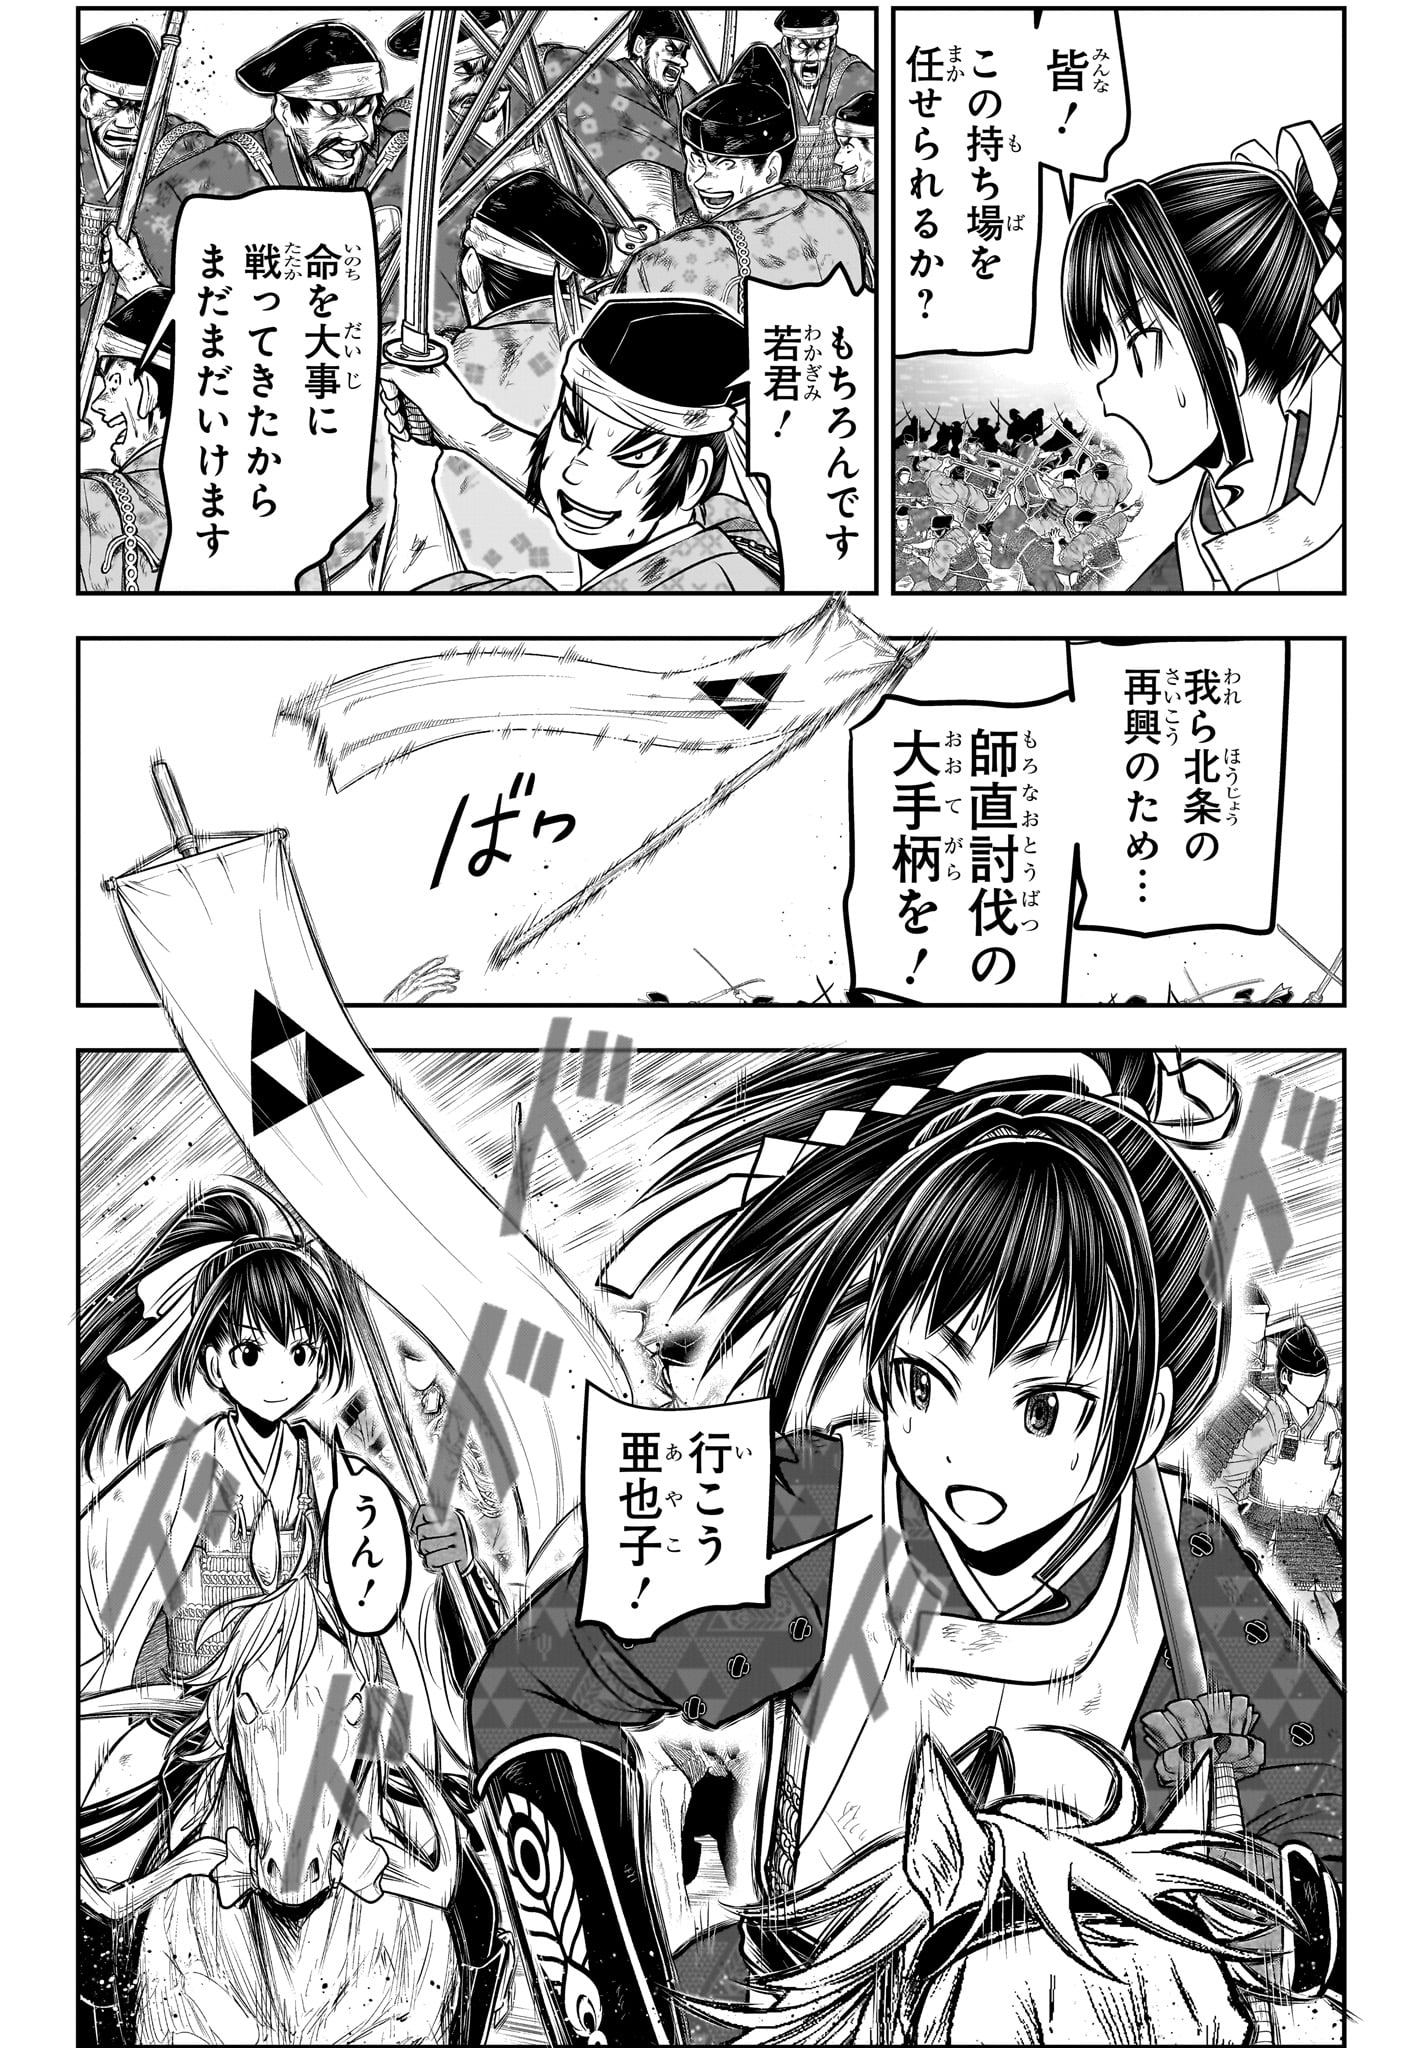 Nige Jouzu no Wakagimi - Chapter 163 - Page 3